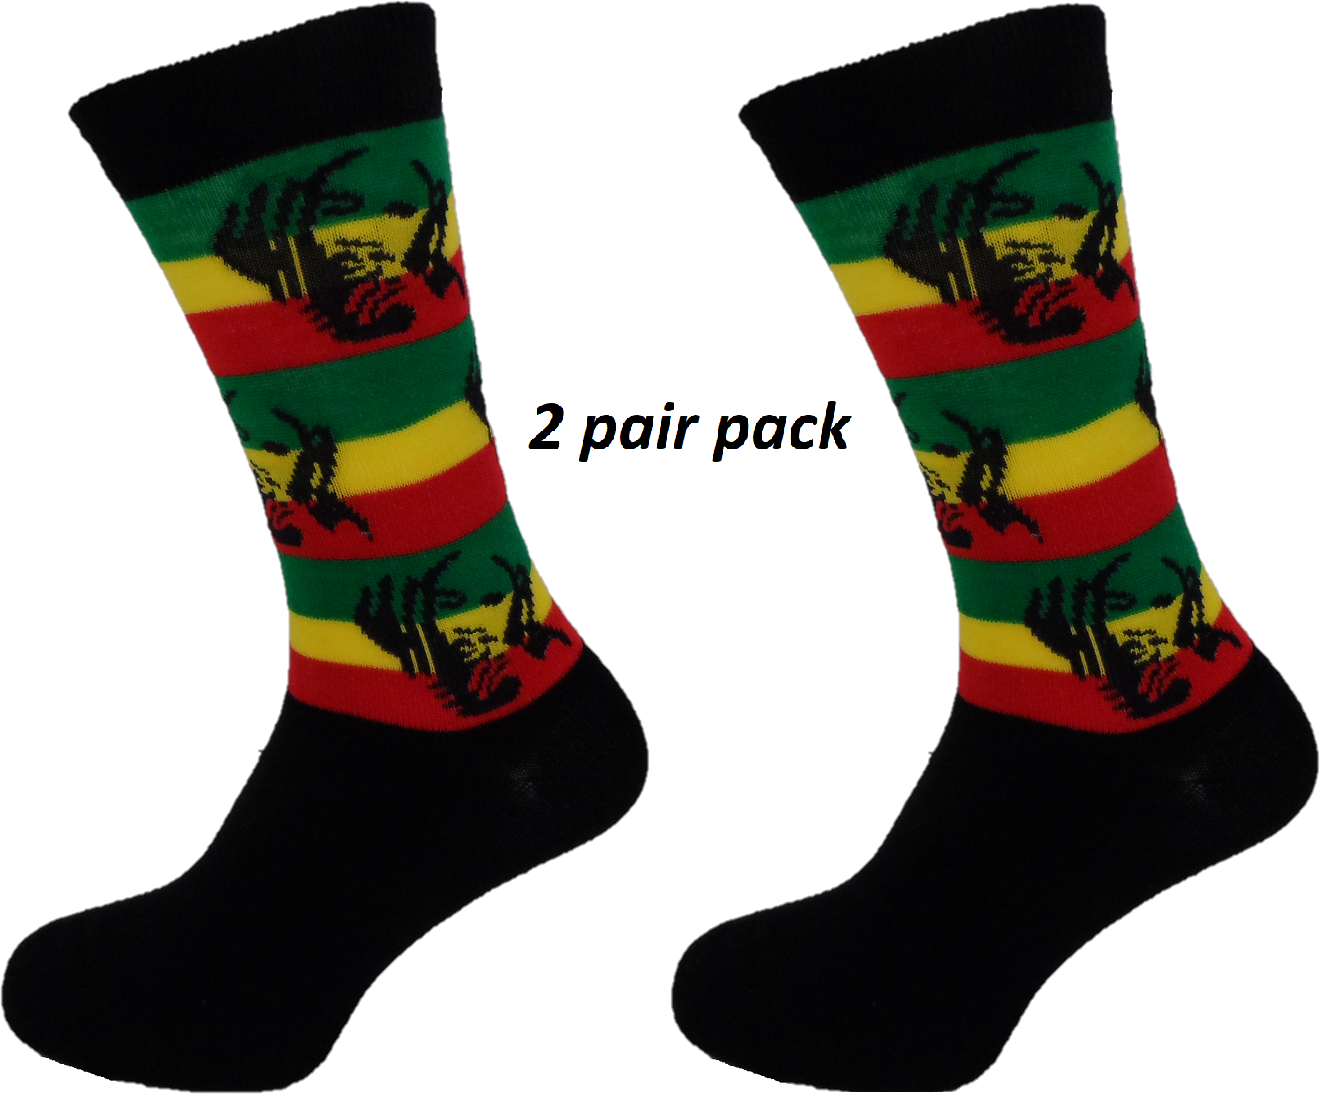 Mens 2 Pair Pack of Rasta Man Striped Retro Socks